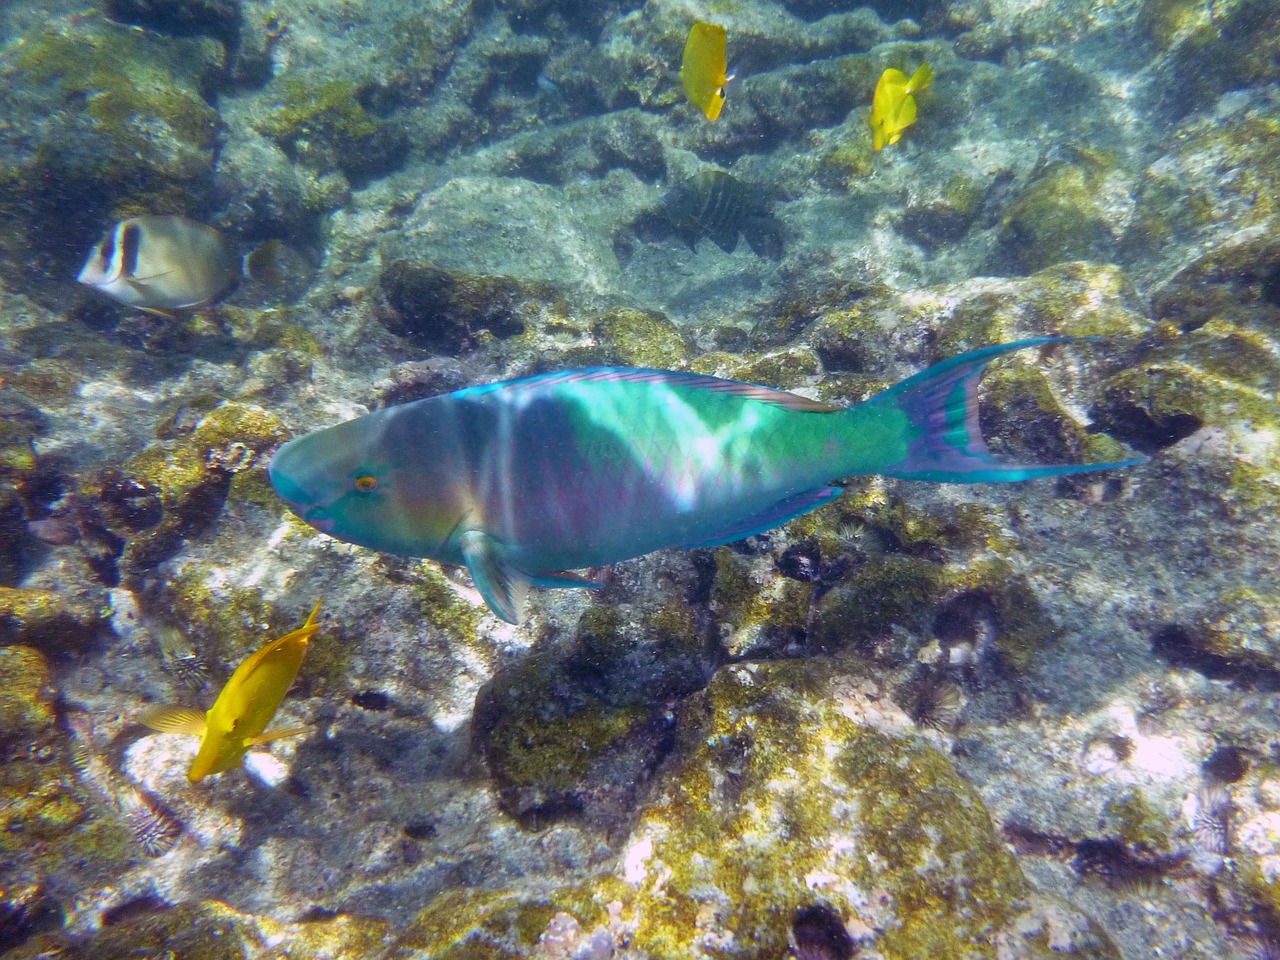 Big Island, kealakakua bay, rainbow, fish, underwater from Big Island Exploring: Kealakekua Snorkeling & Manta Ray Swimming on Slow Down, See More